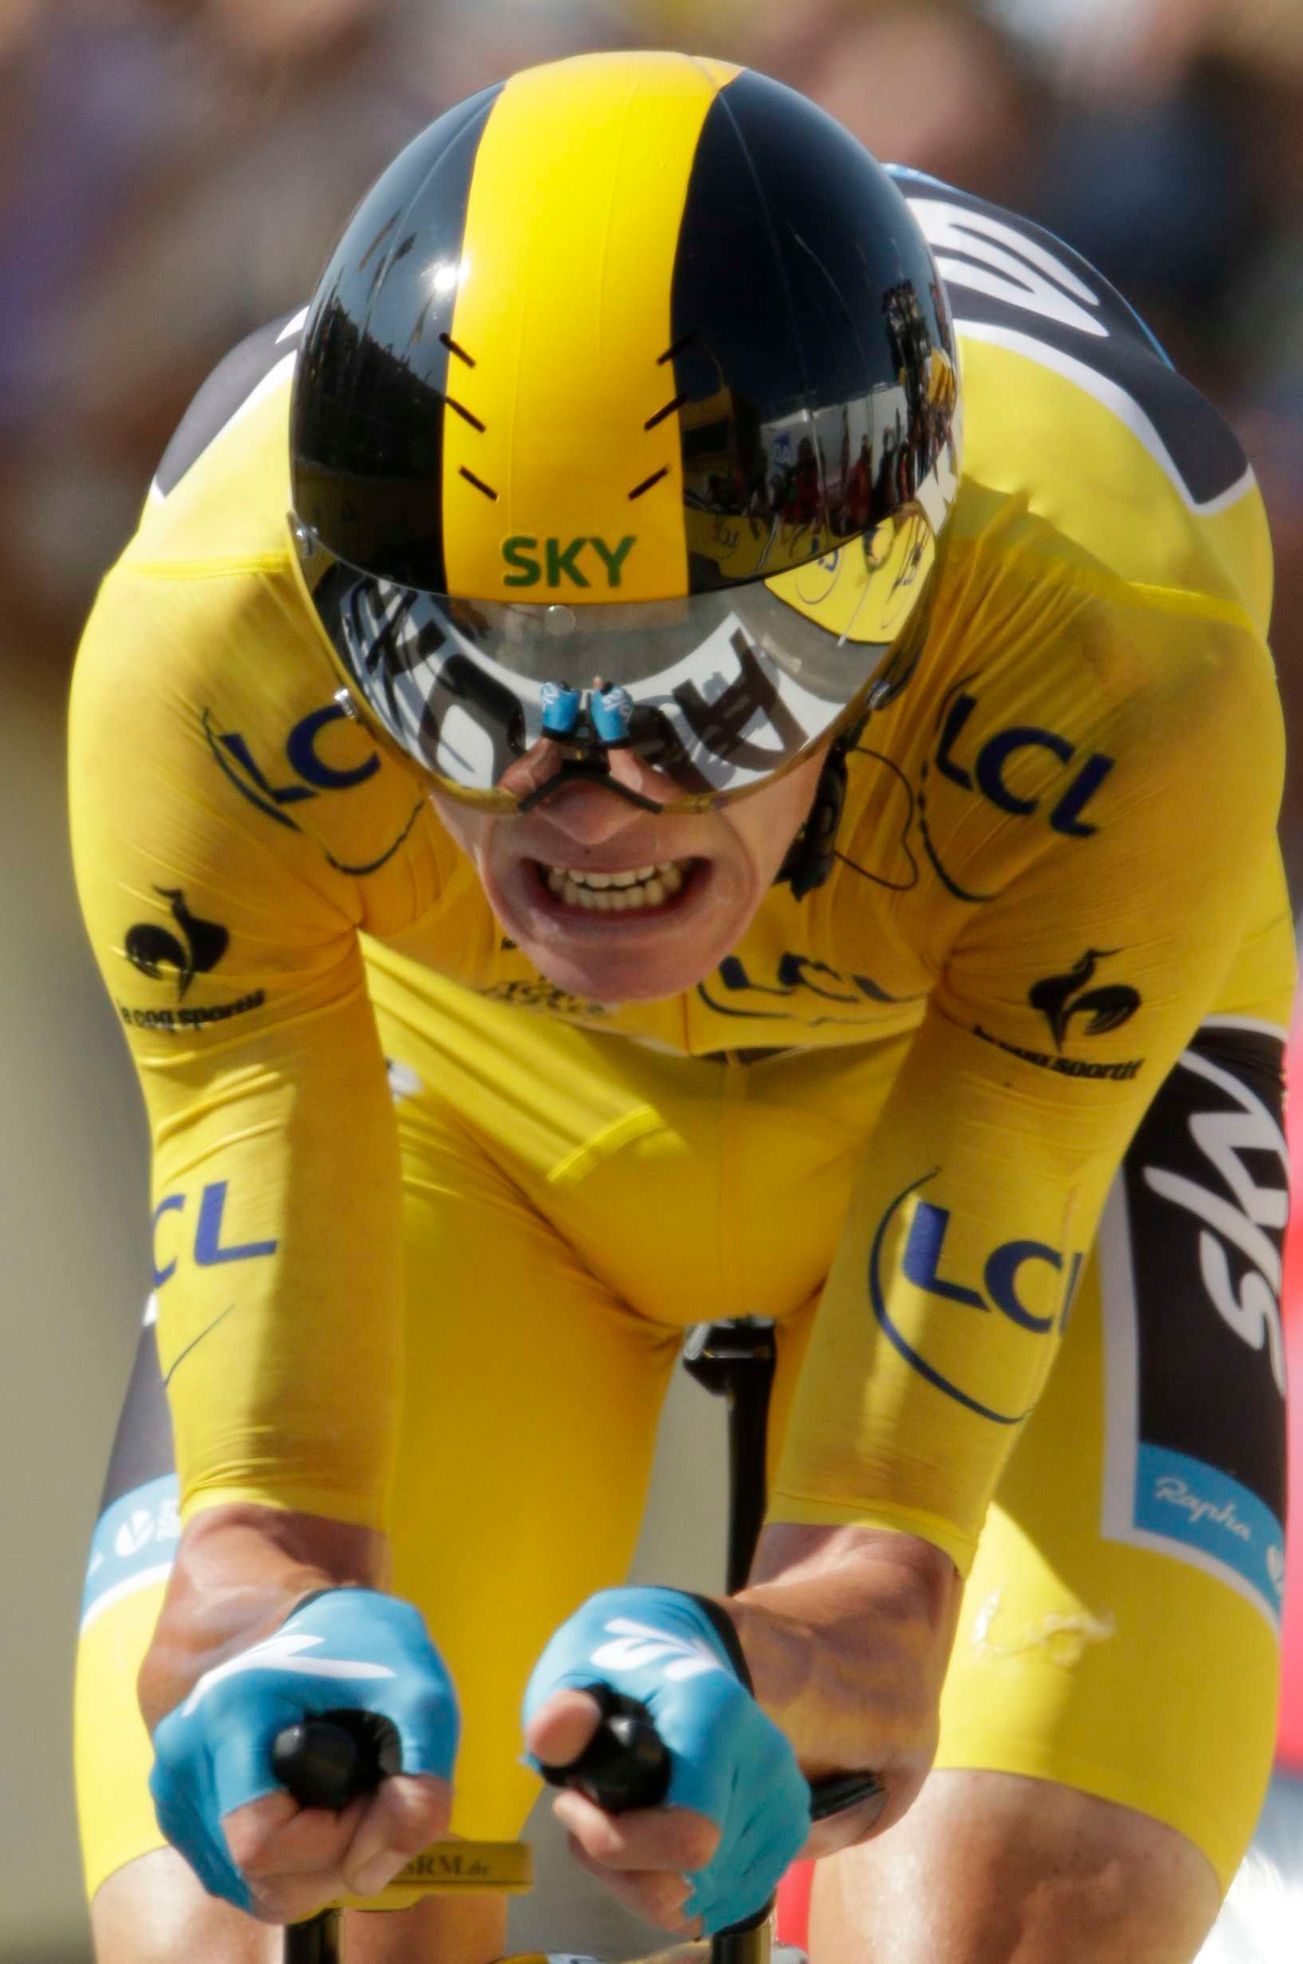 Tour de France 2013 - 11. etapa, časovka (Chris Froome)